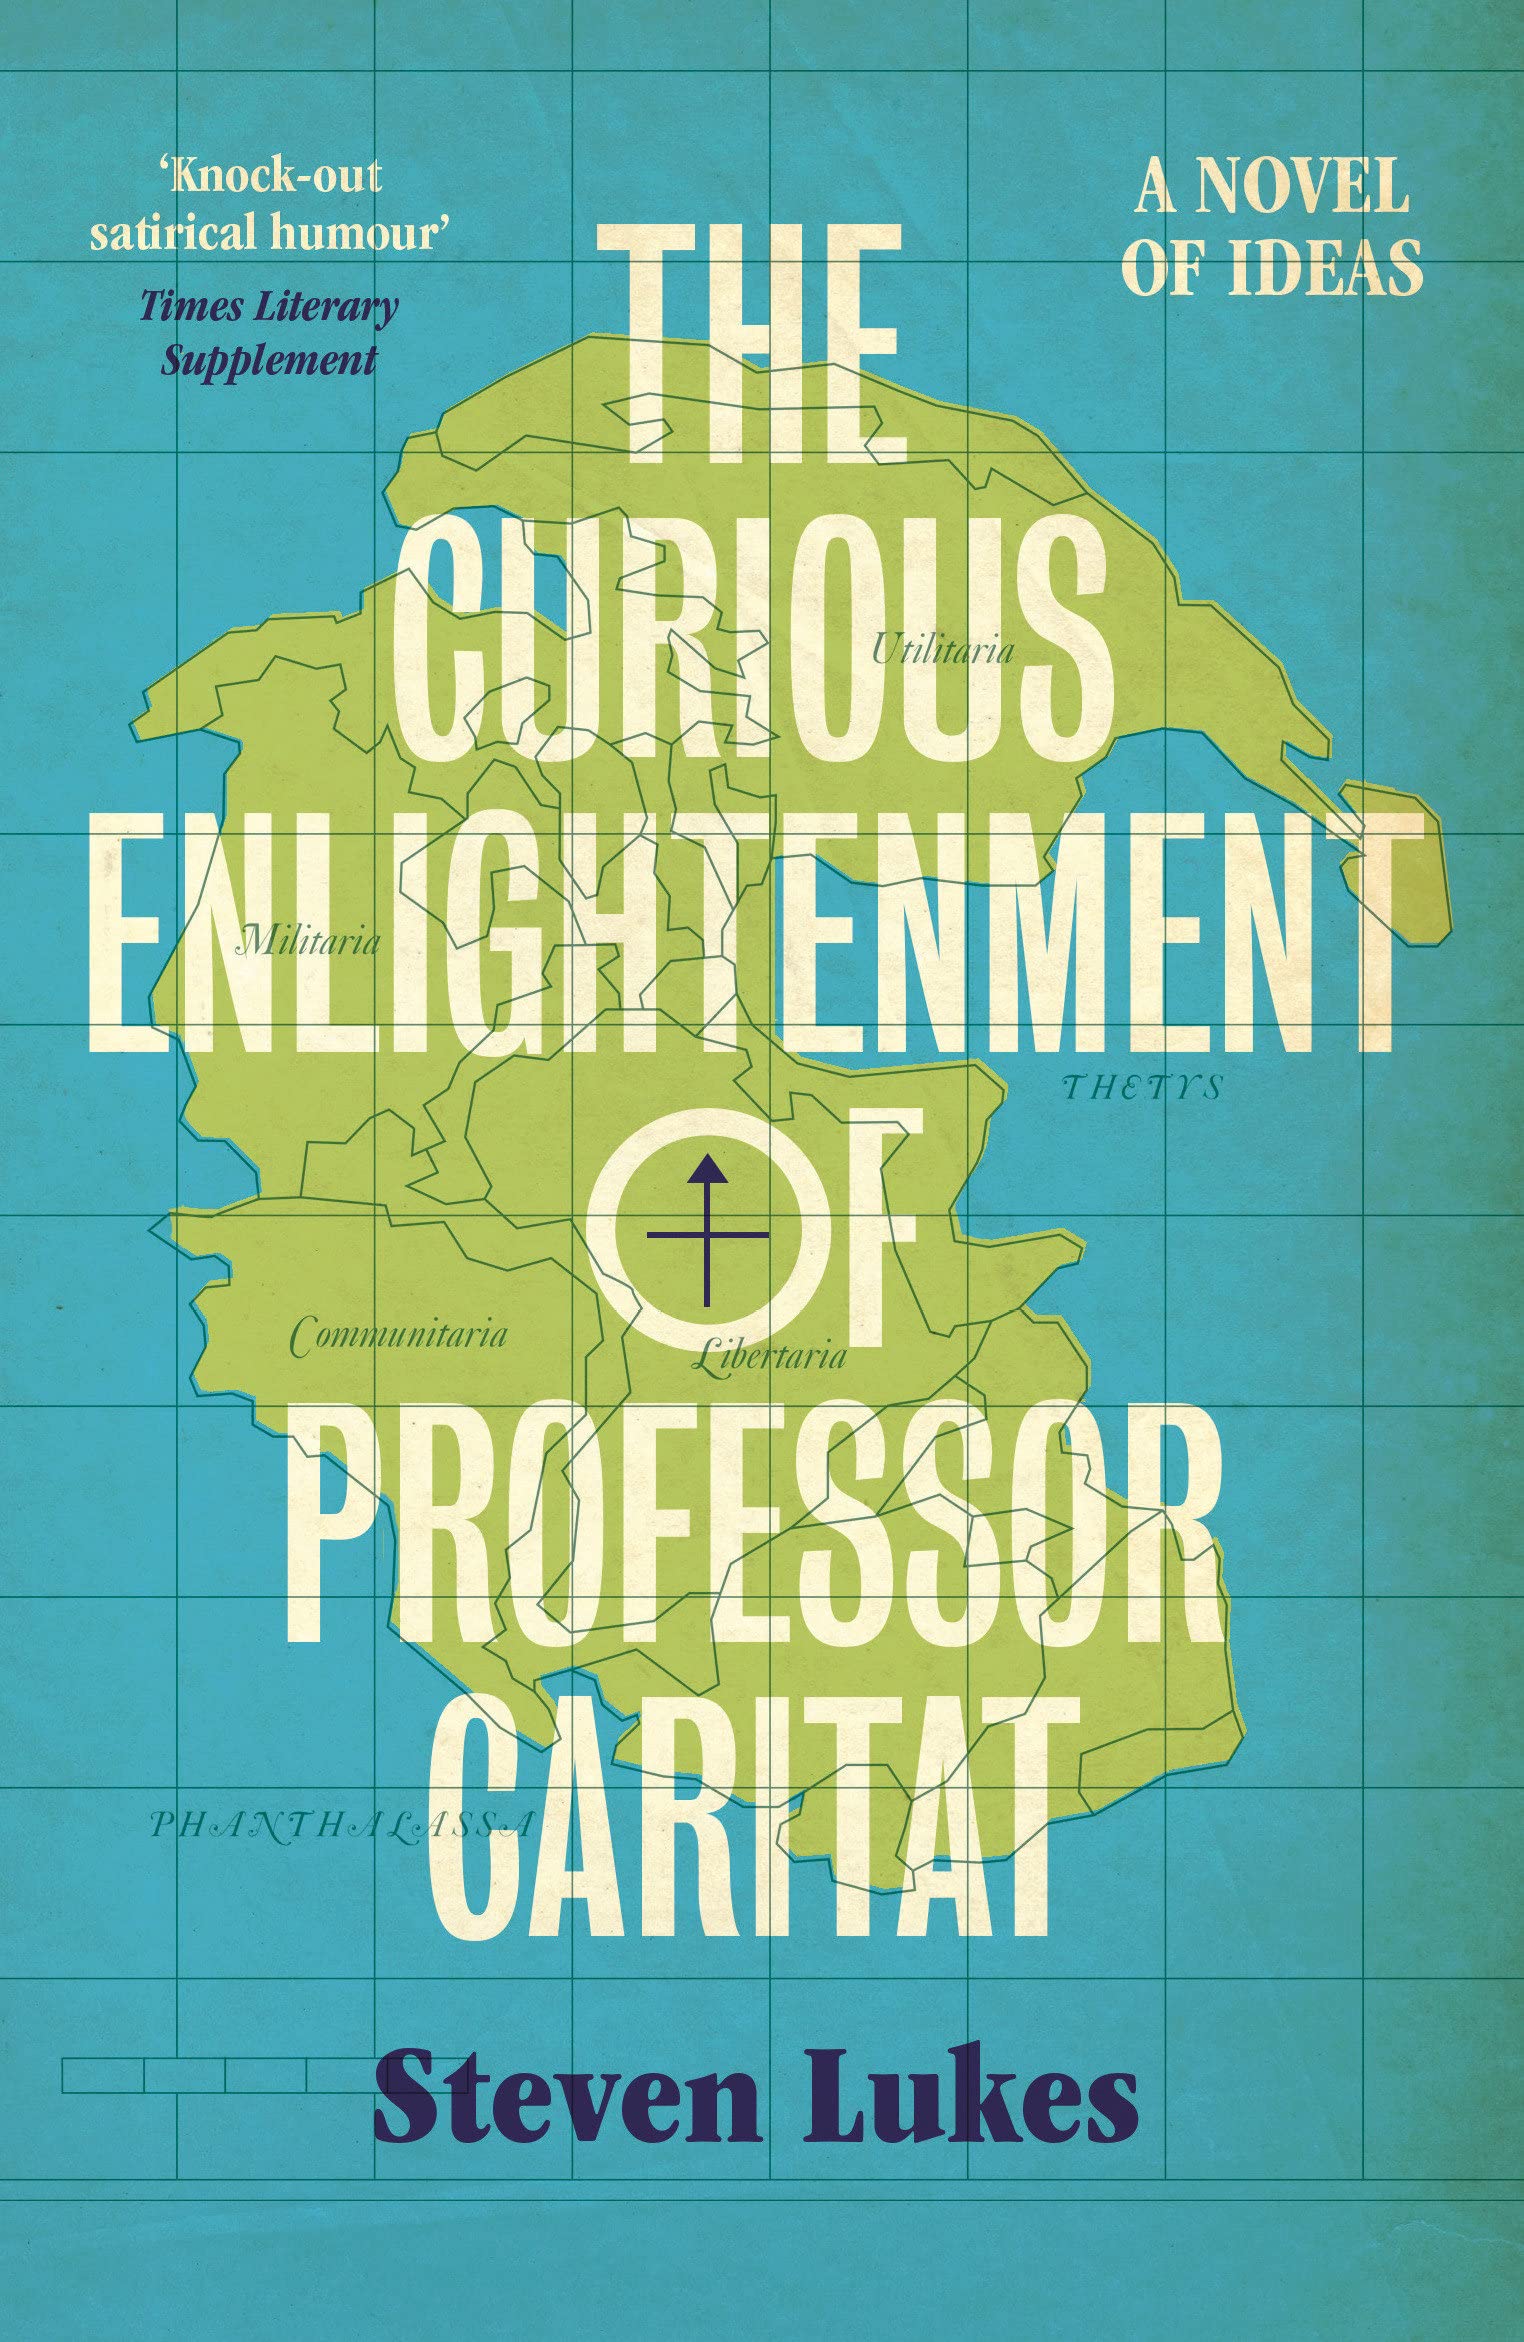 The Curious Enlightenment of Professor Caritat | Steven Lukes